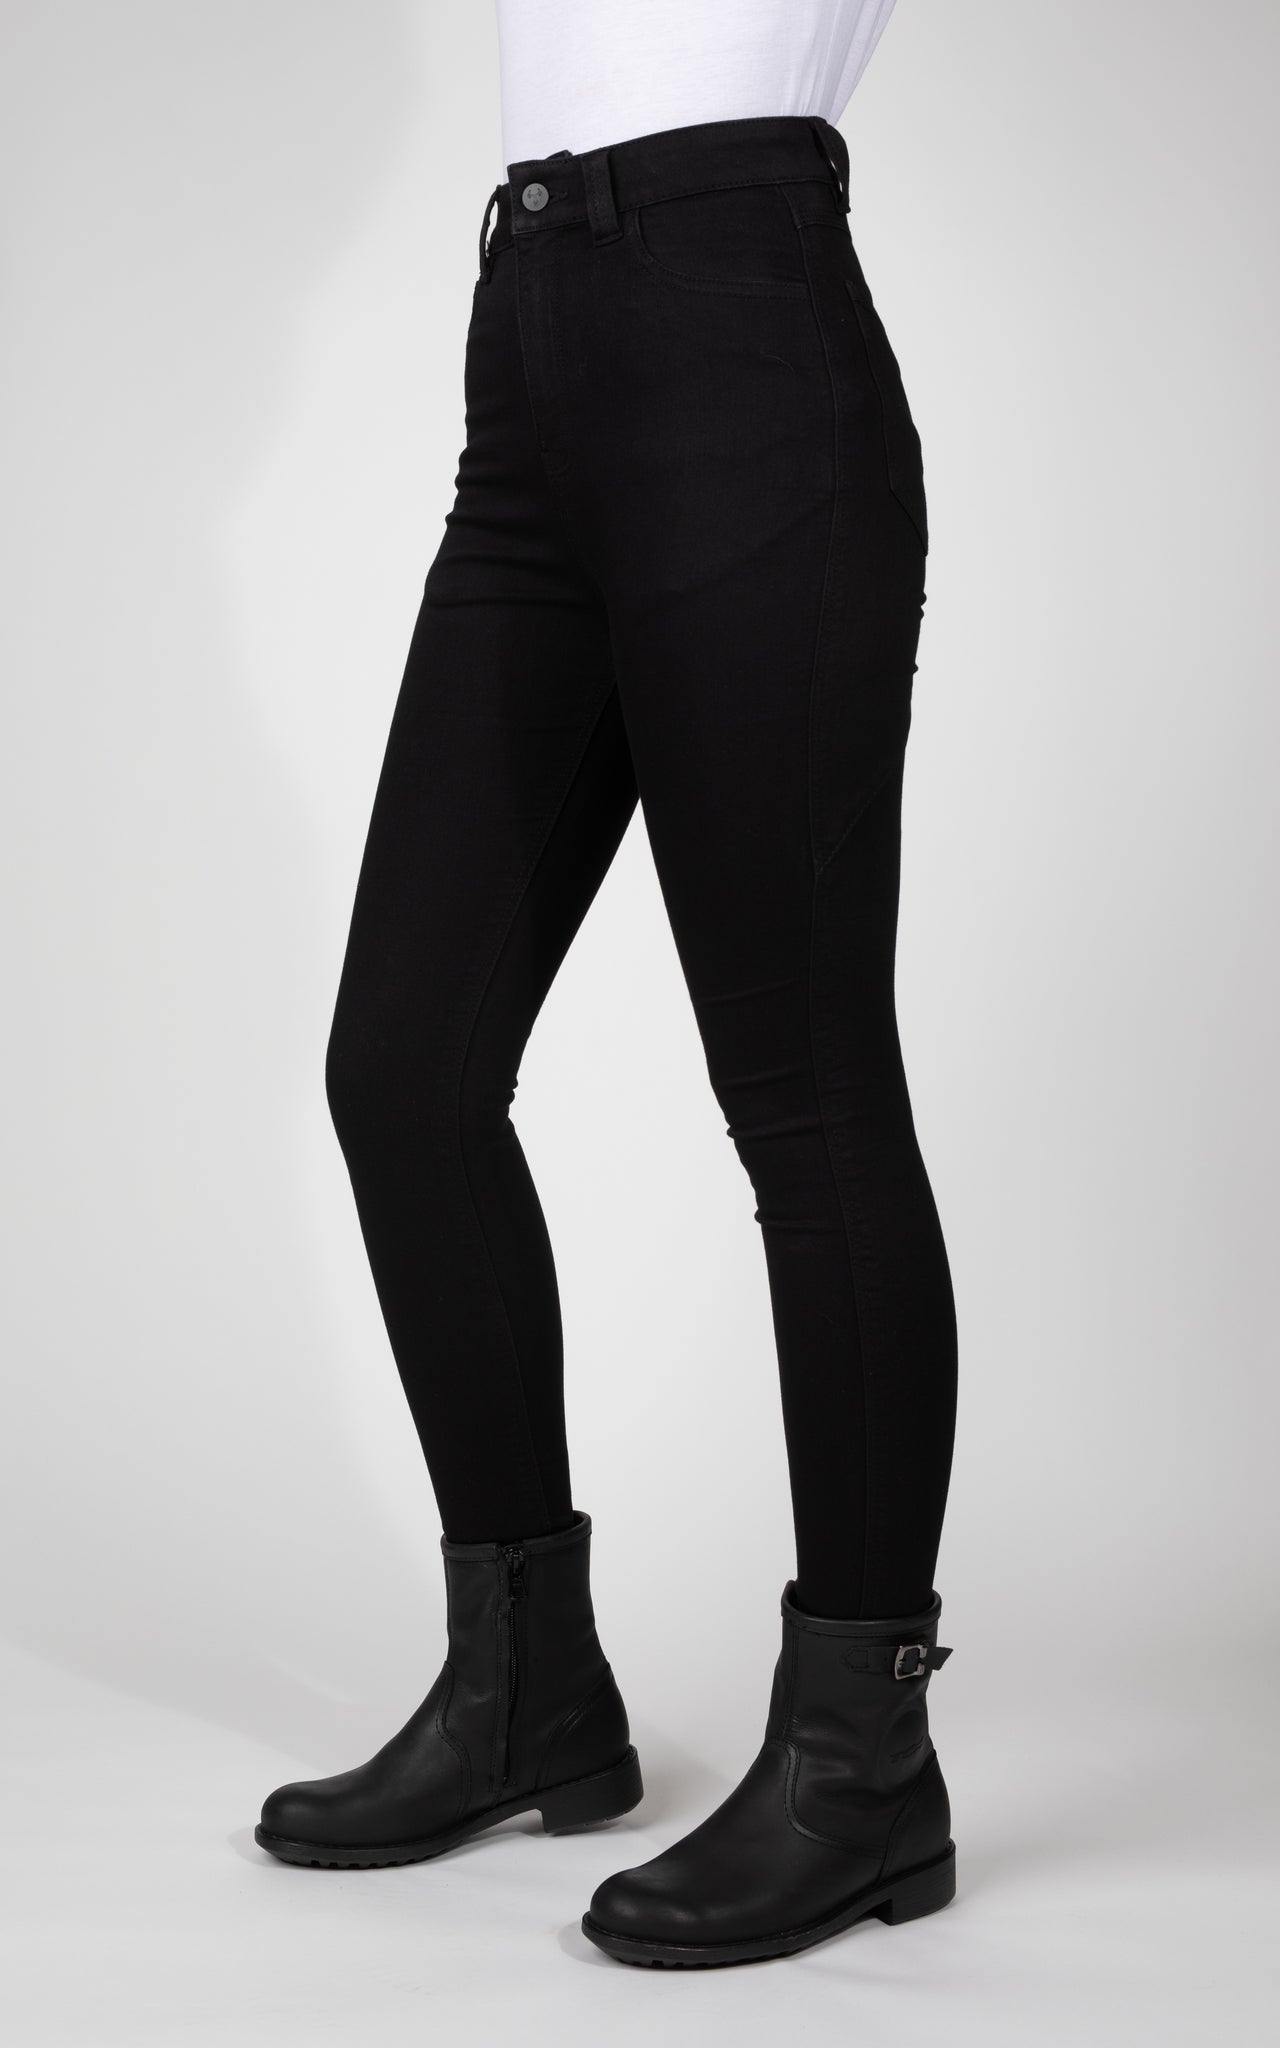 Woman's legs wearing black woman's motorcycle jeans from Bull-it